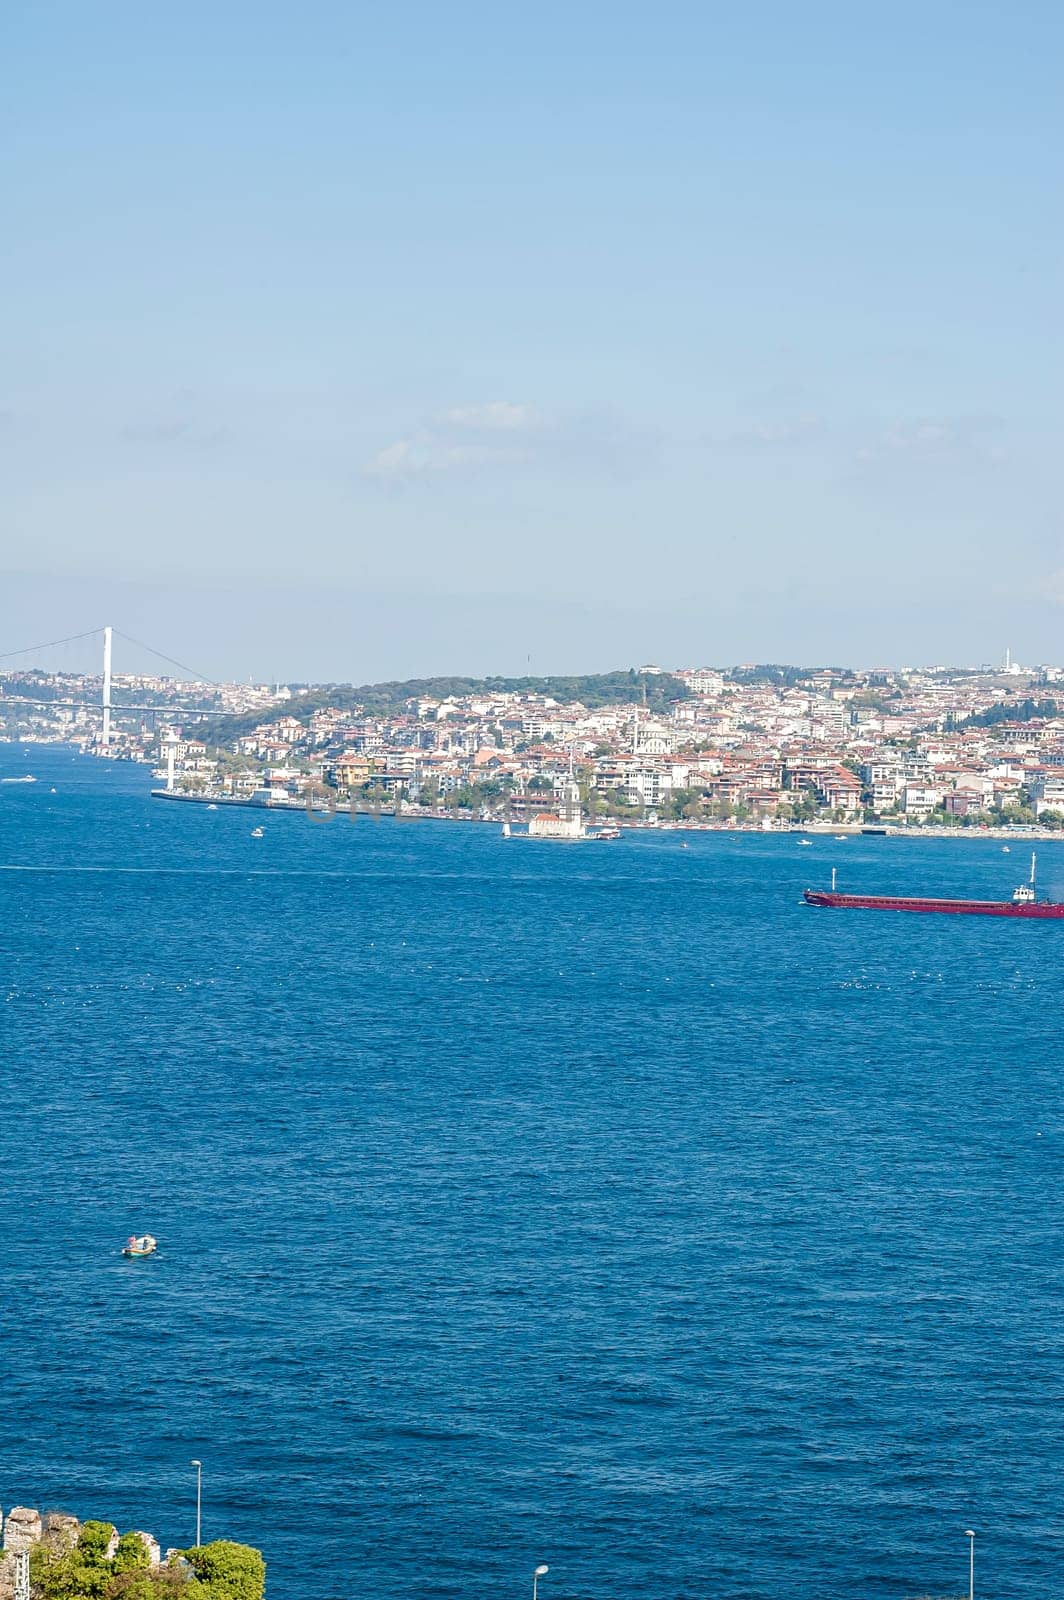 The Bosphorus by Giamplume